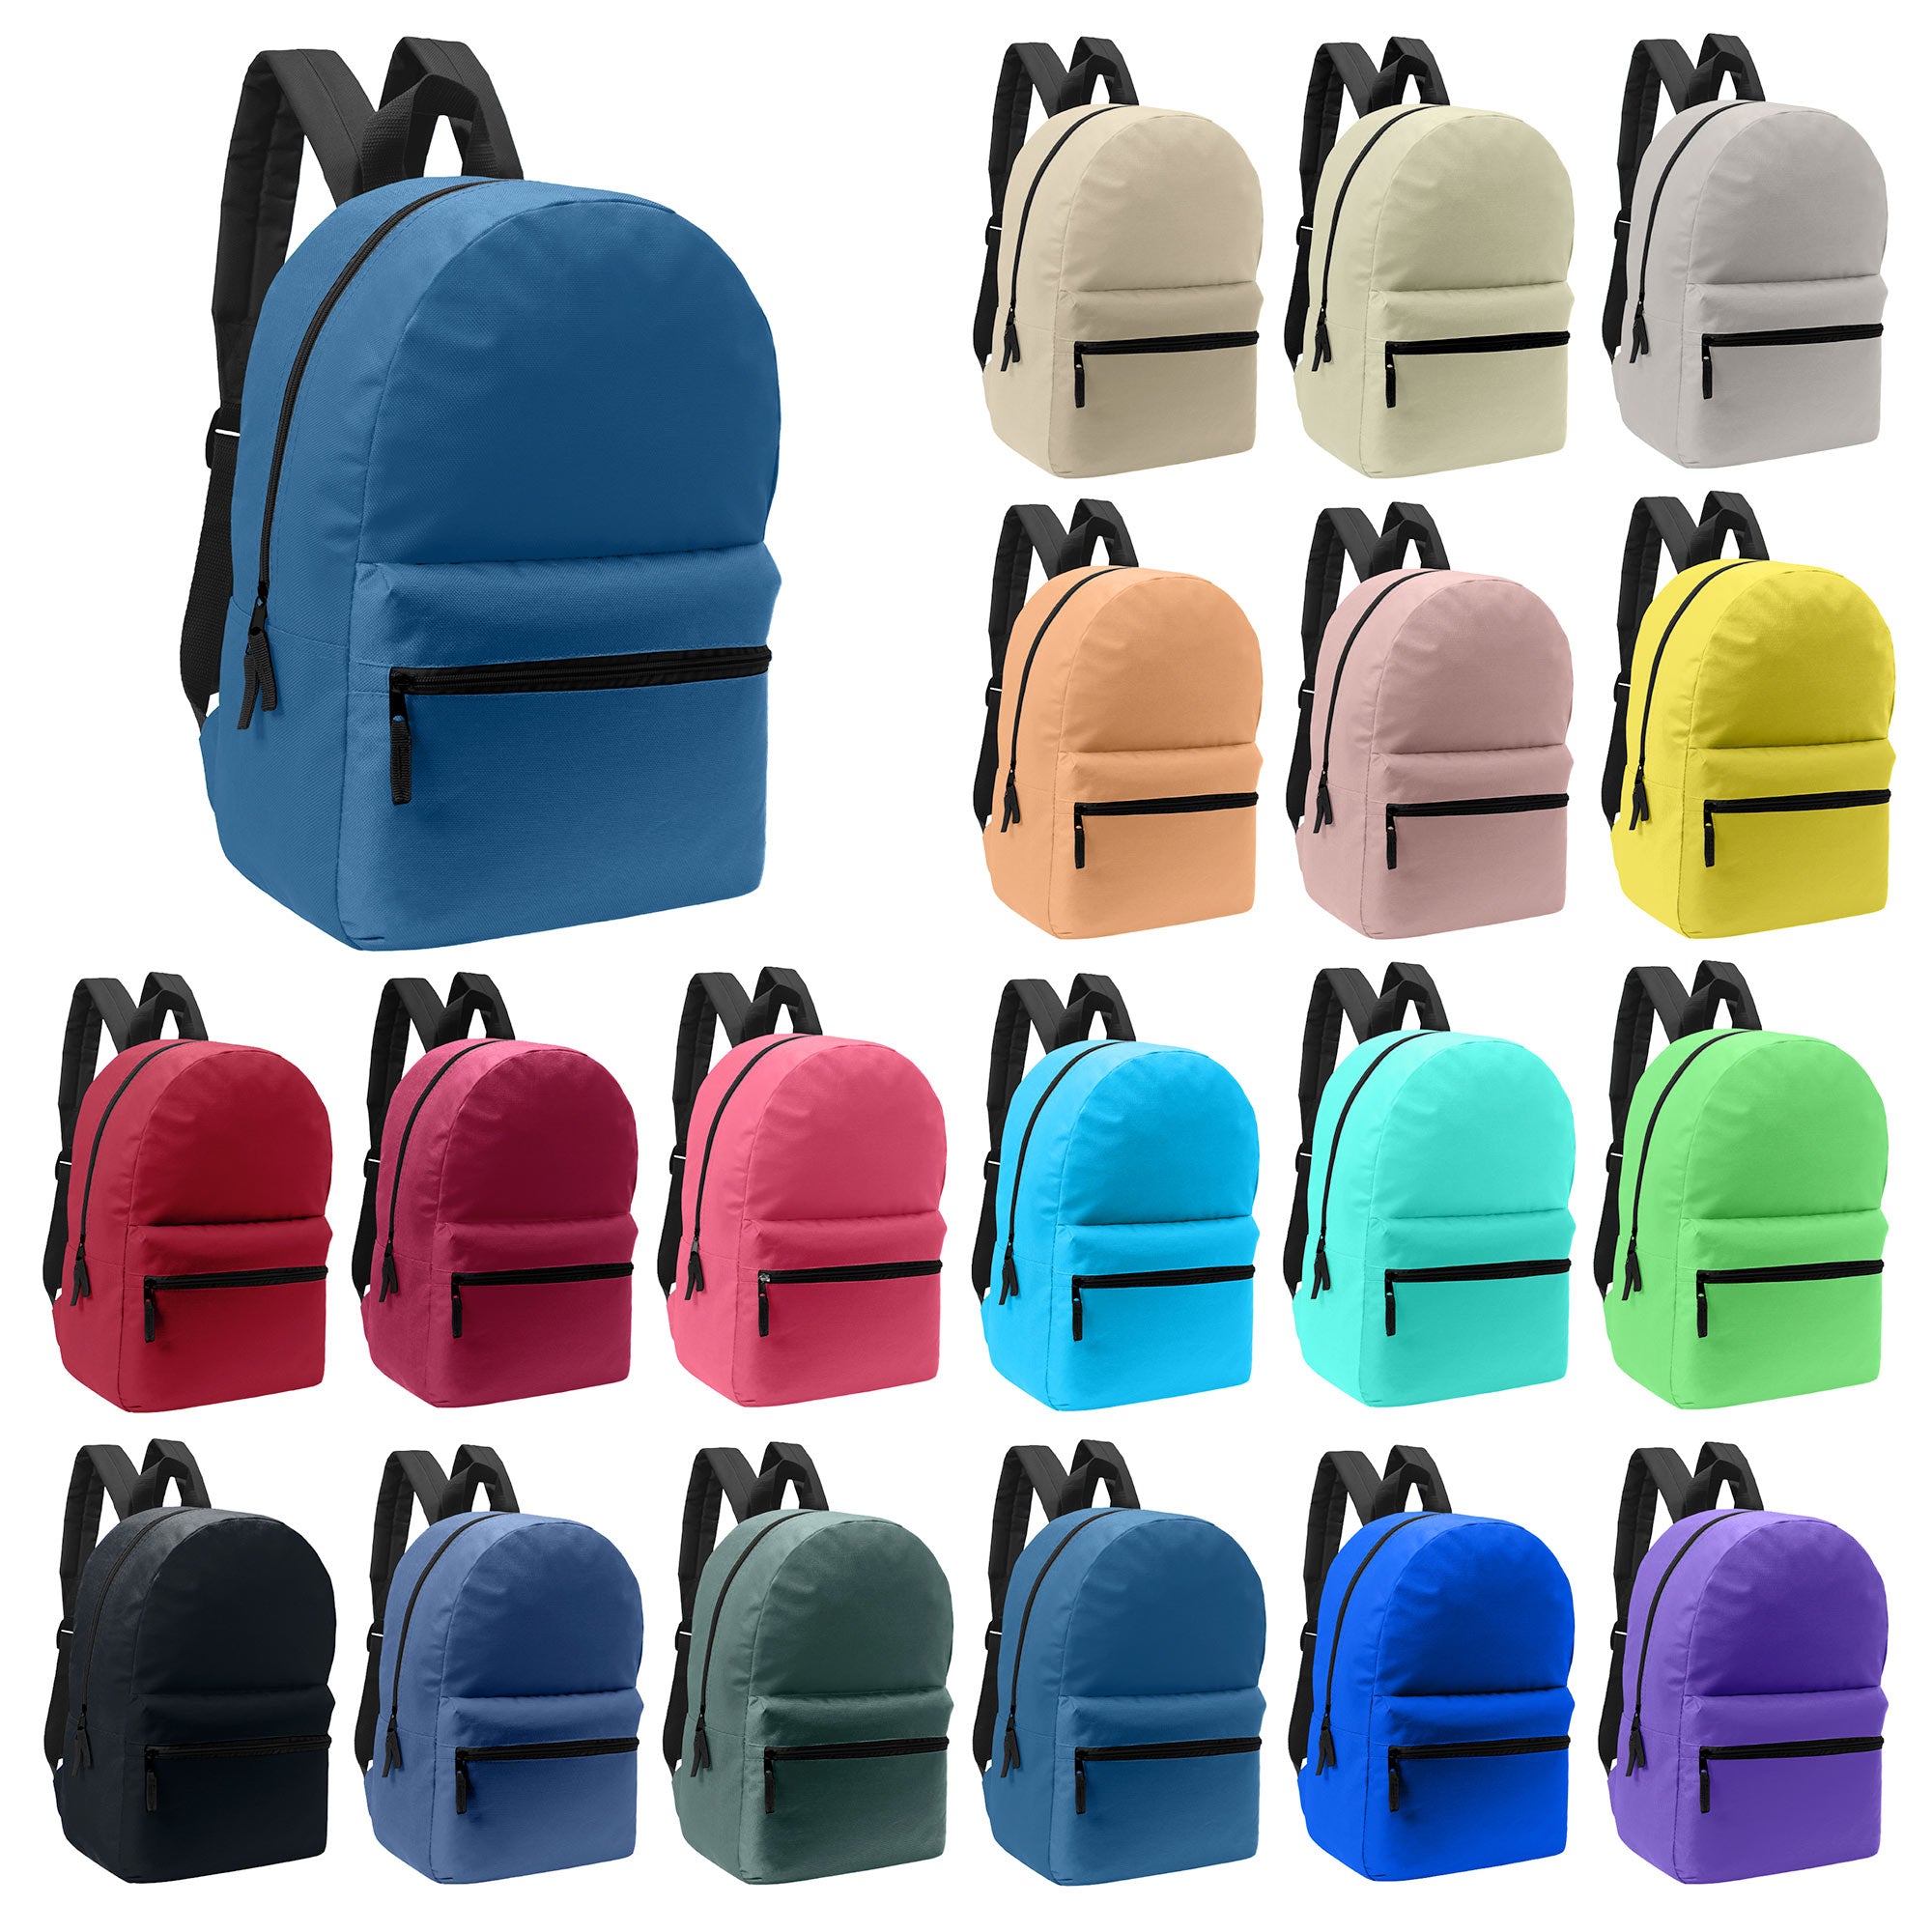 wholesale backpacks in bulk for back to school in 18 colors BAPA-280-36 